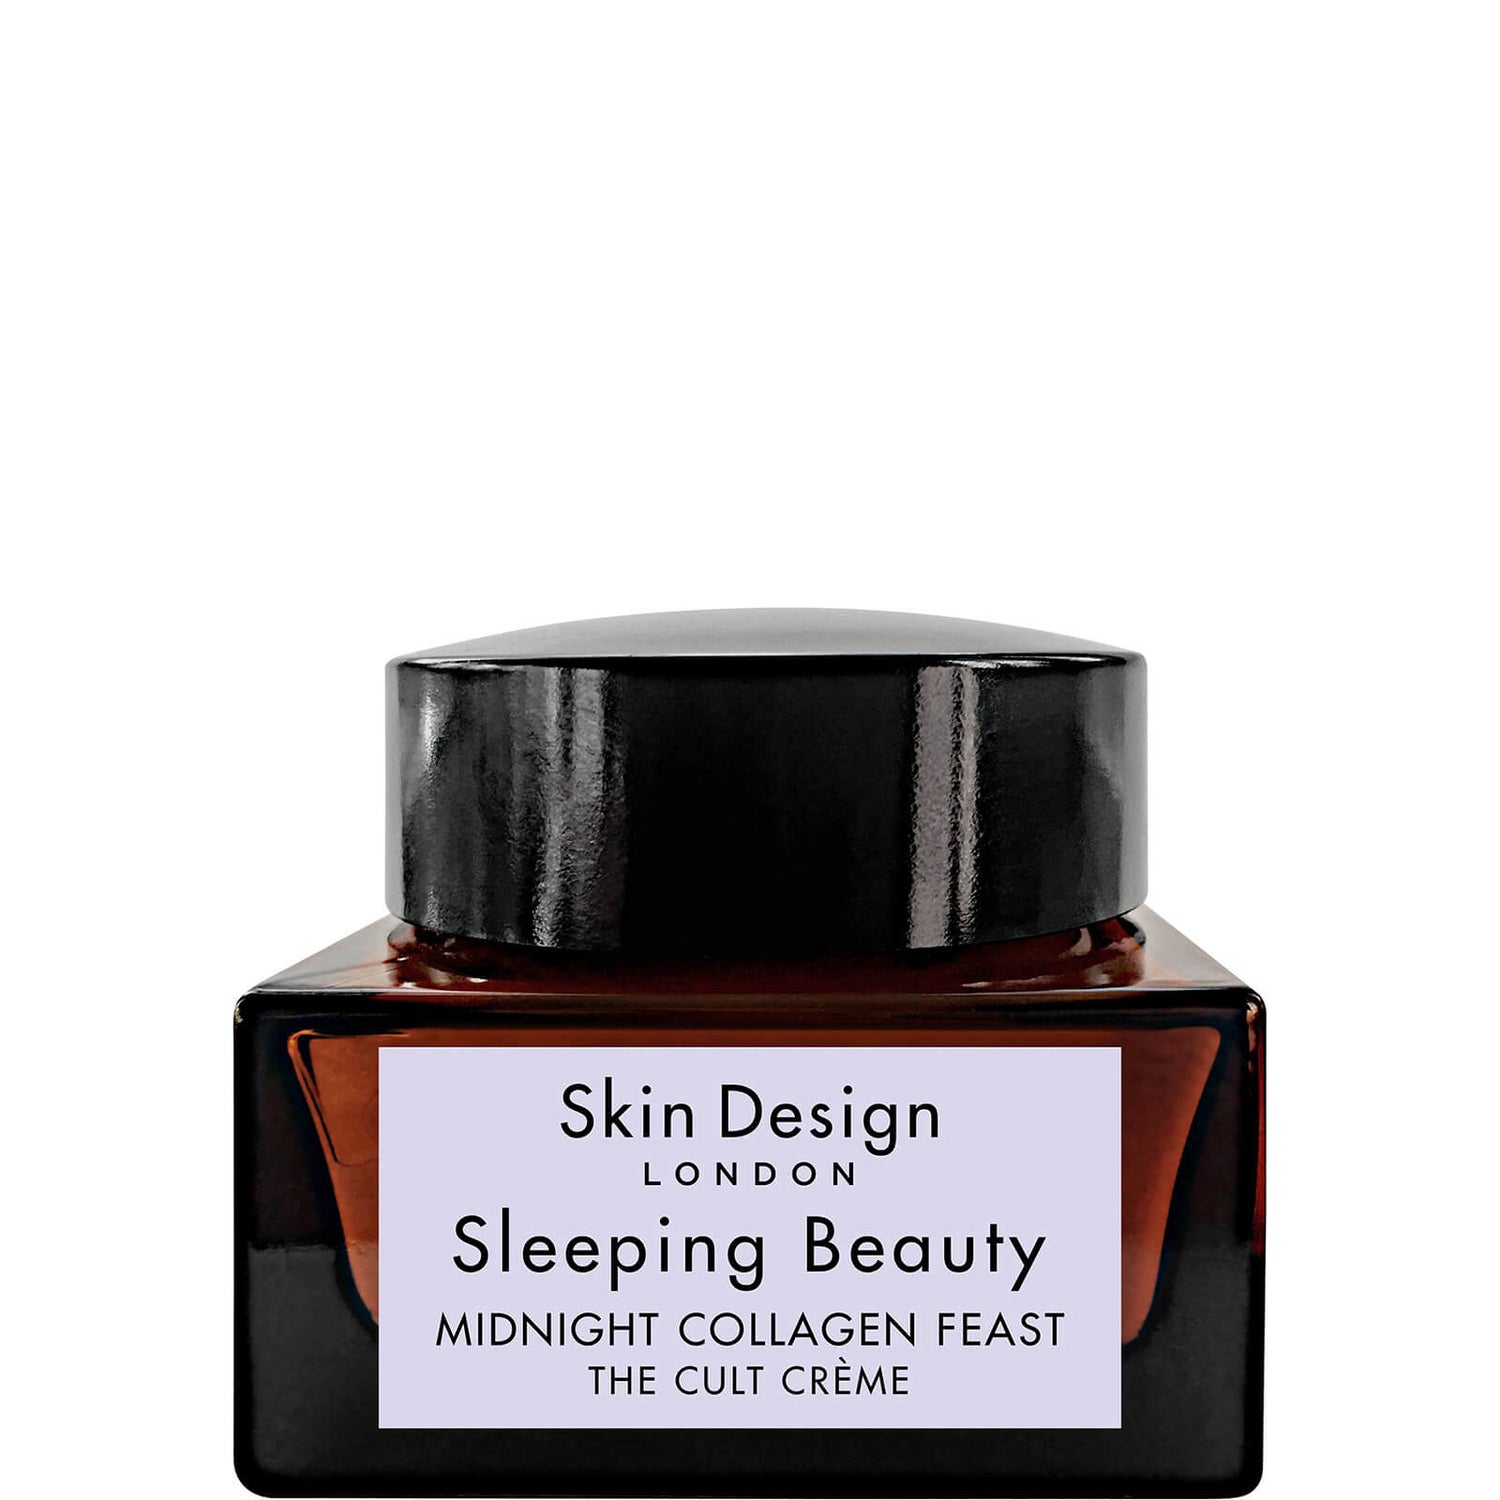 Skin Design London Sleeping Beauty - Midnight Collagen Feast